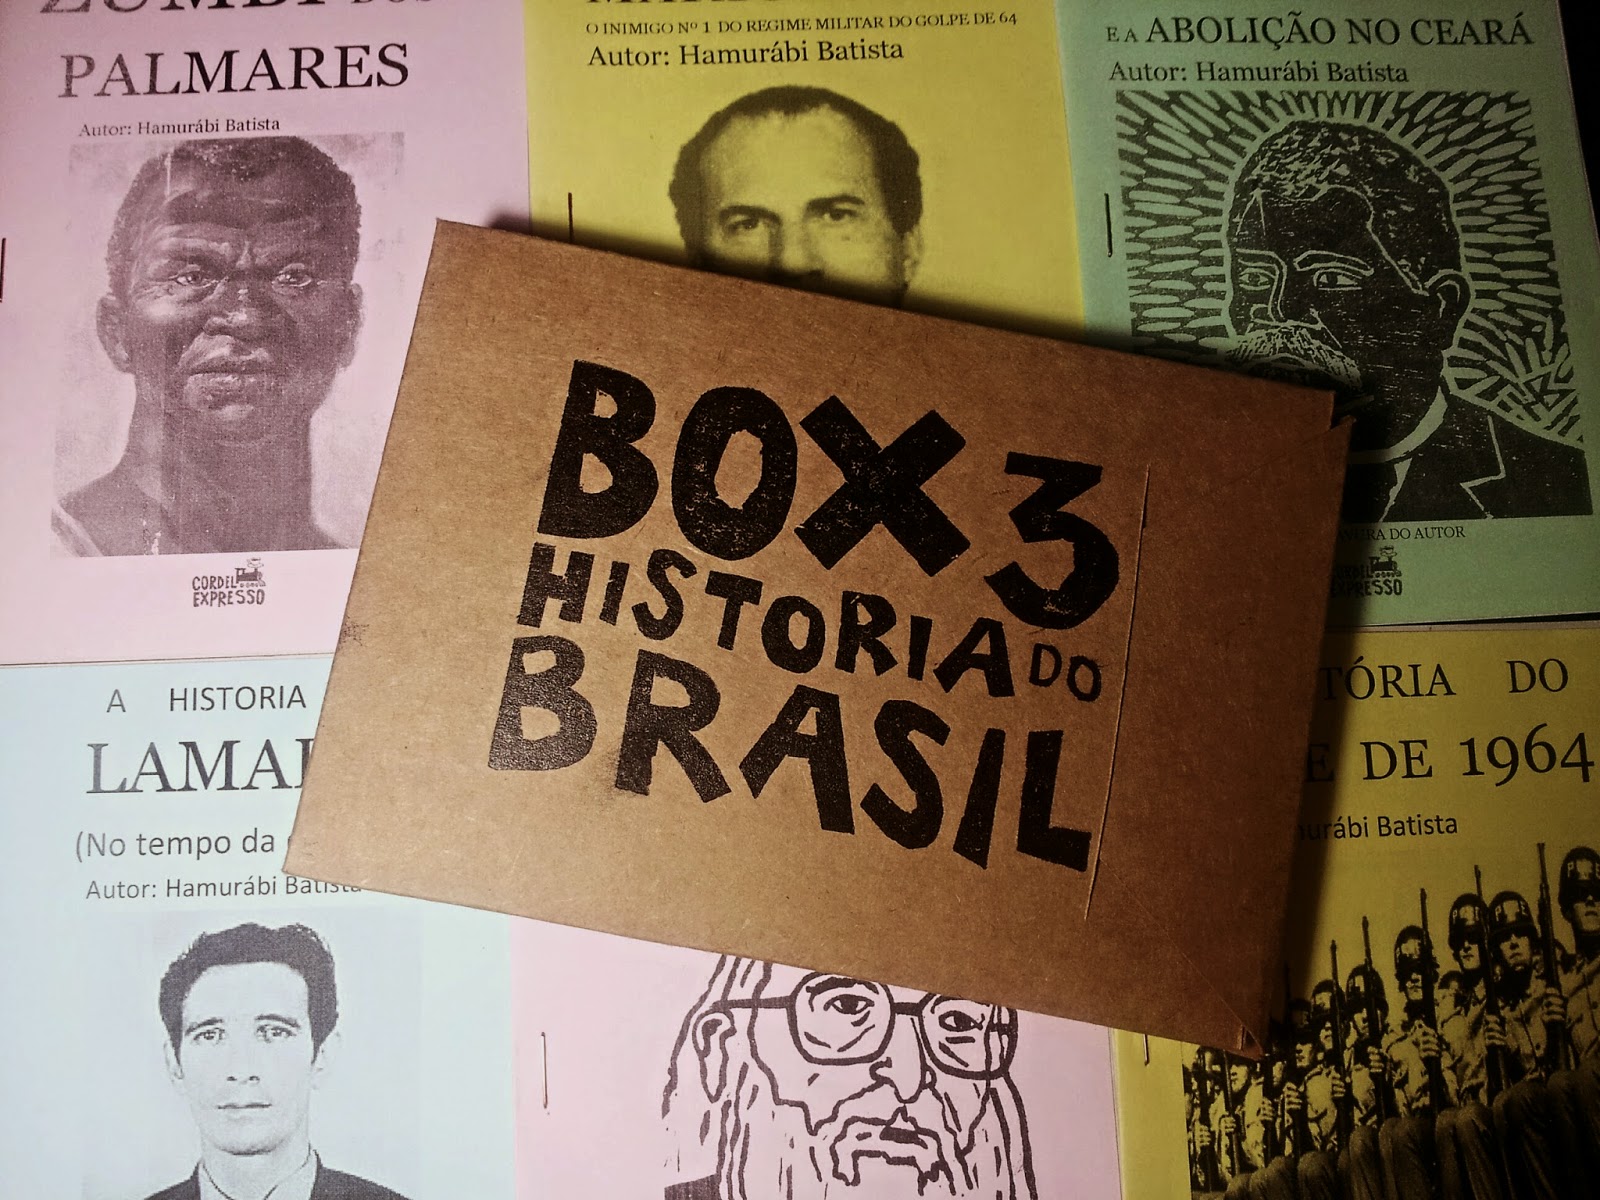 http://cordelexpresso.blogspot.com.br/2014/07/box-3-historia-do-brasil-12-cordeis.html